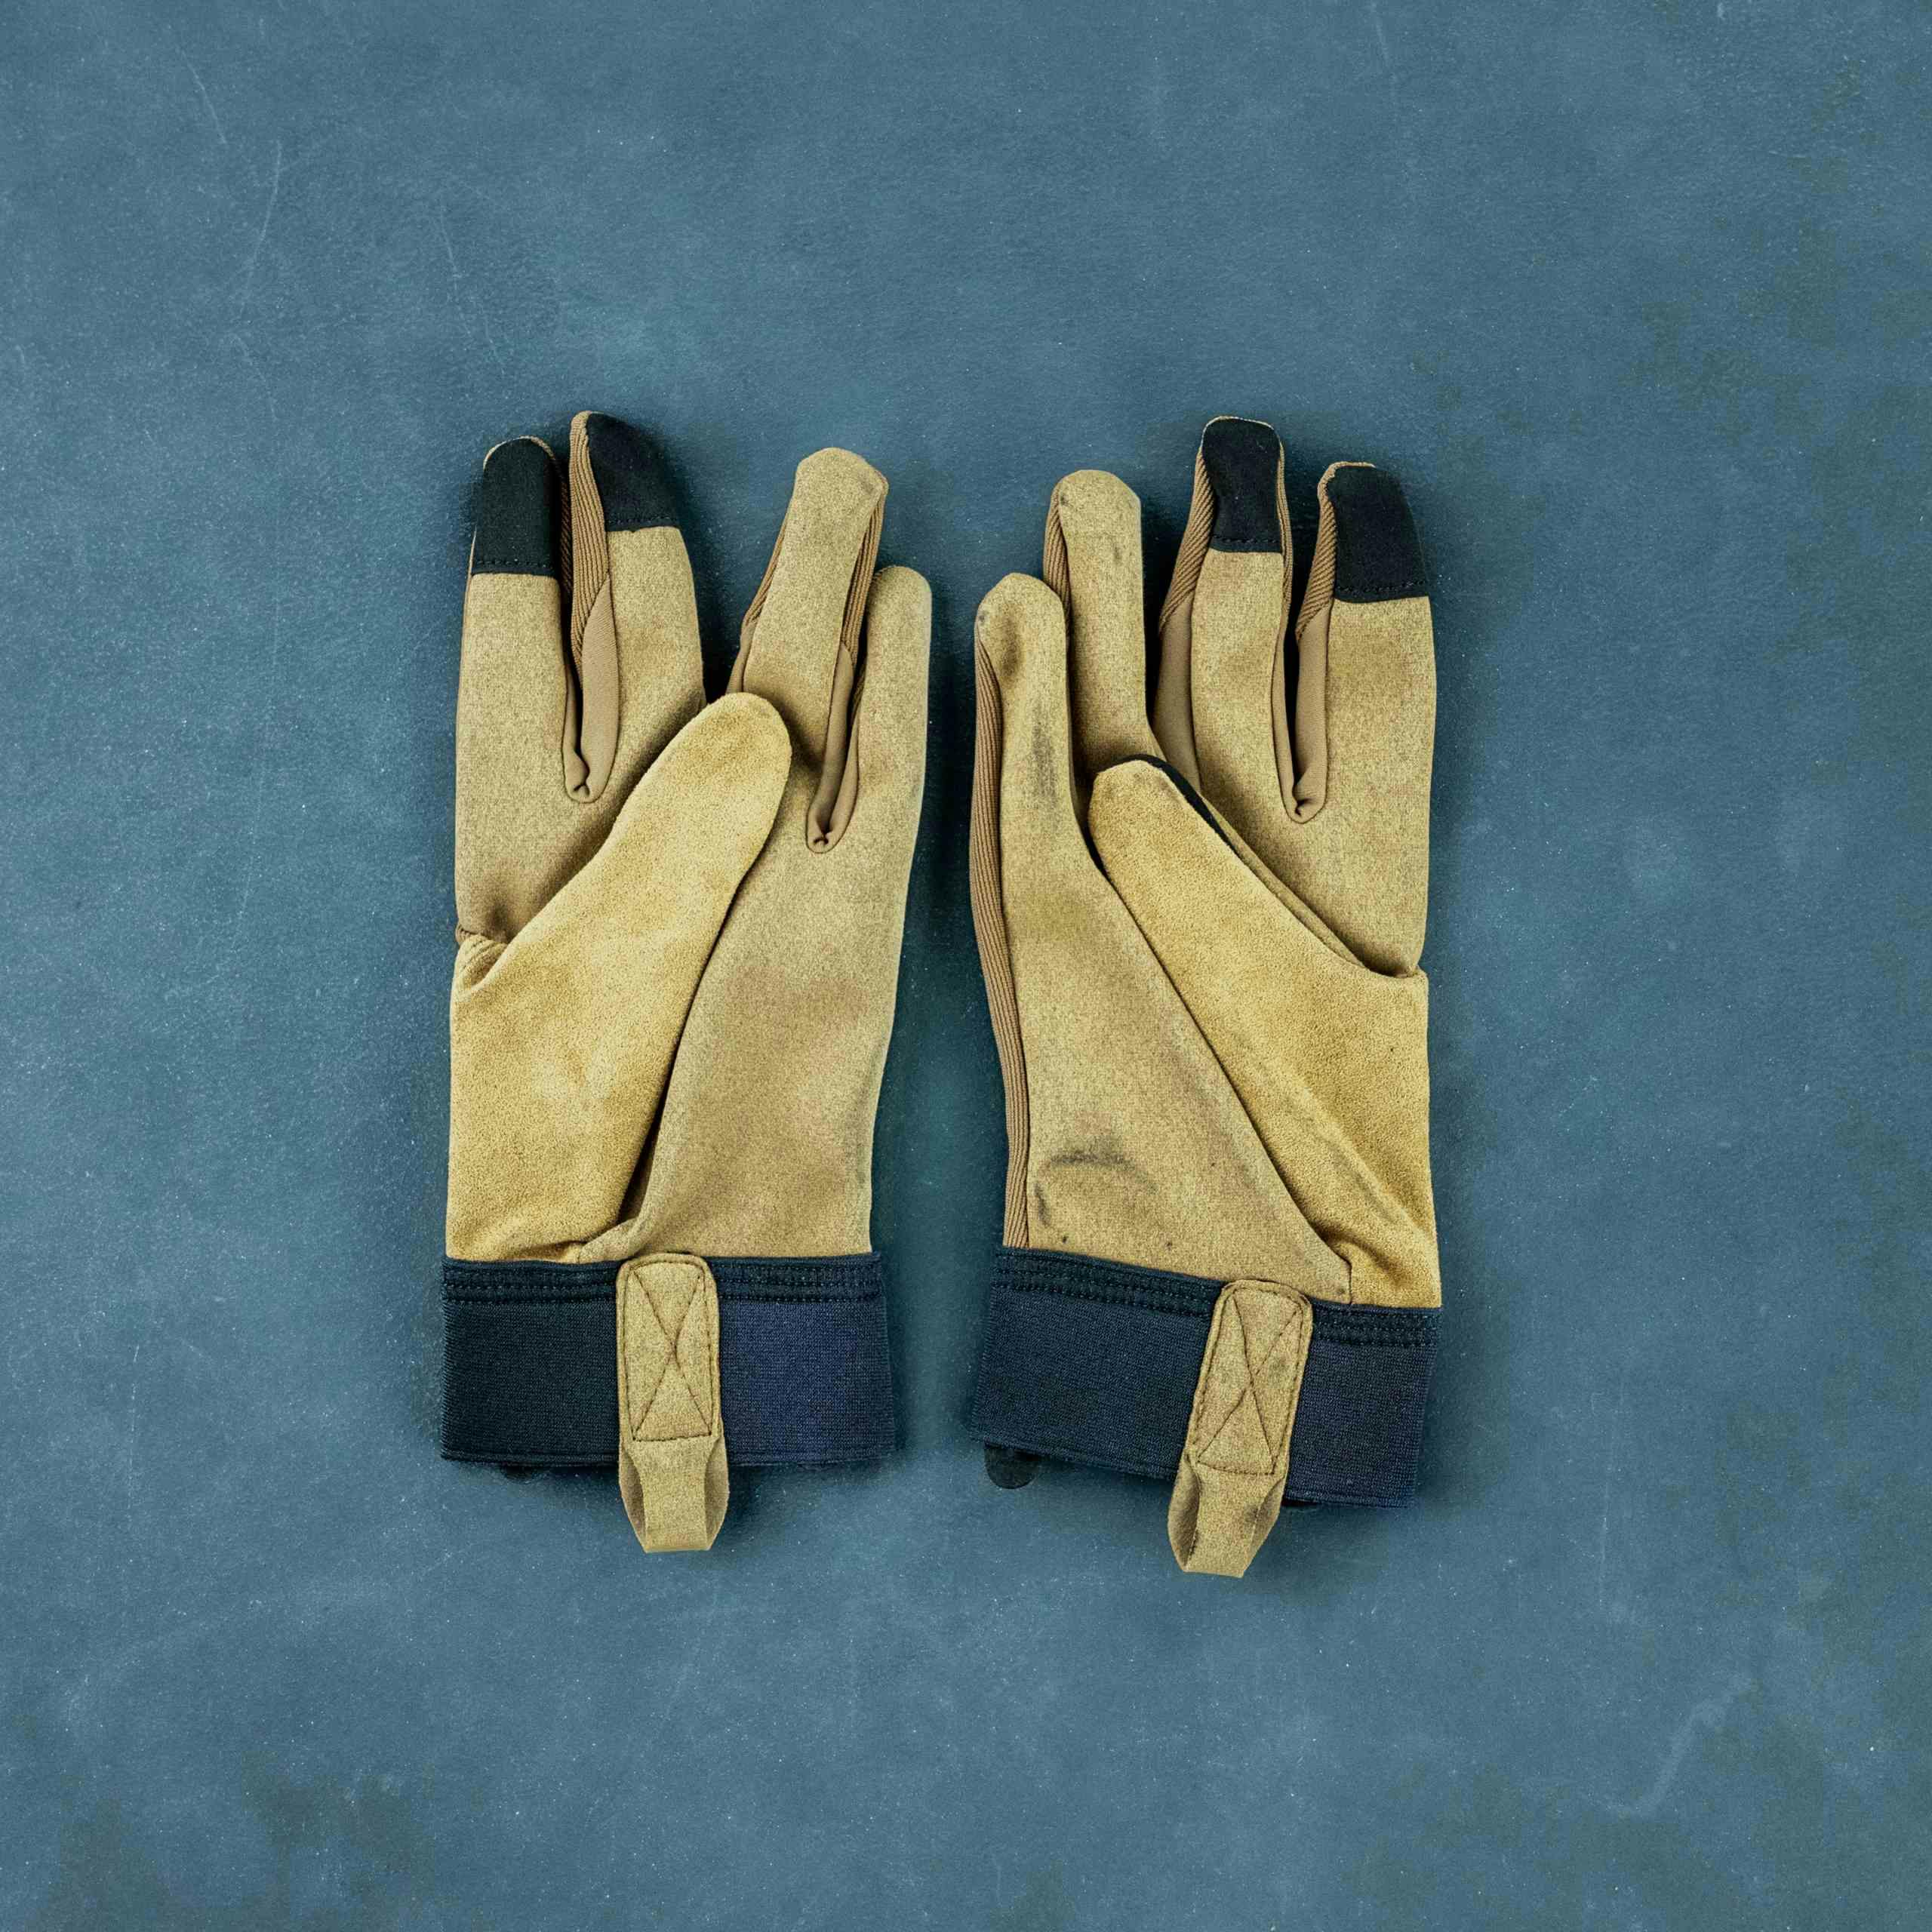 Magpul Technical Glove 2.0 Black, XL